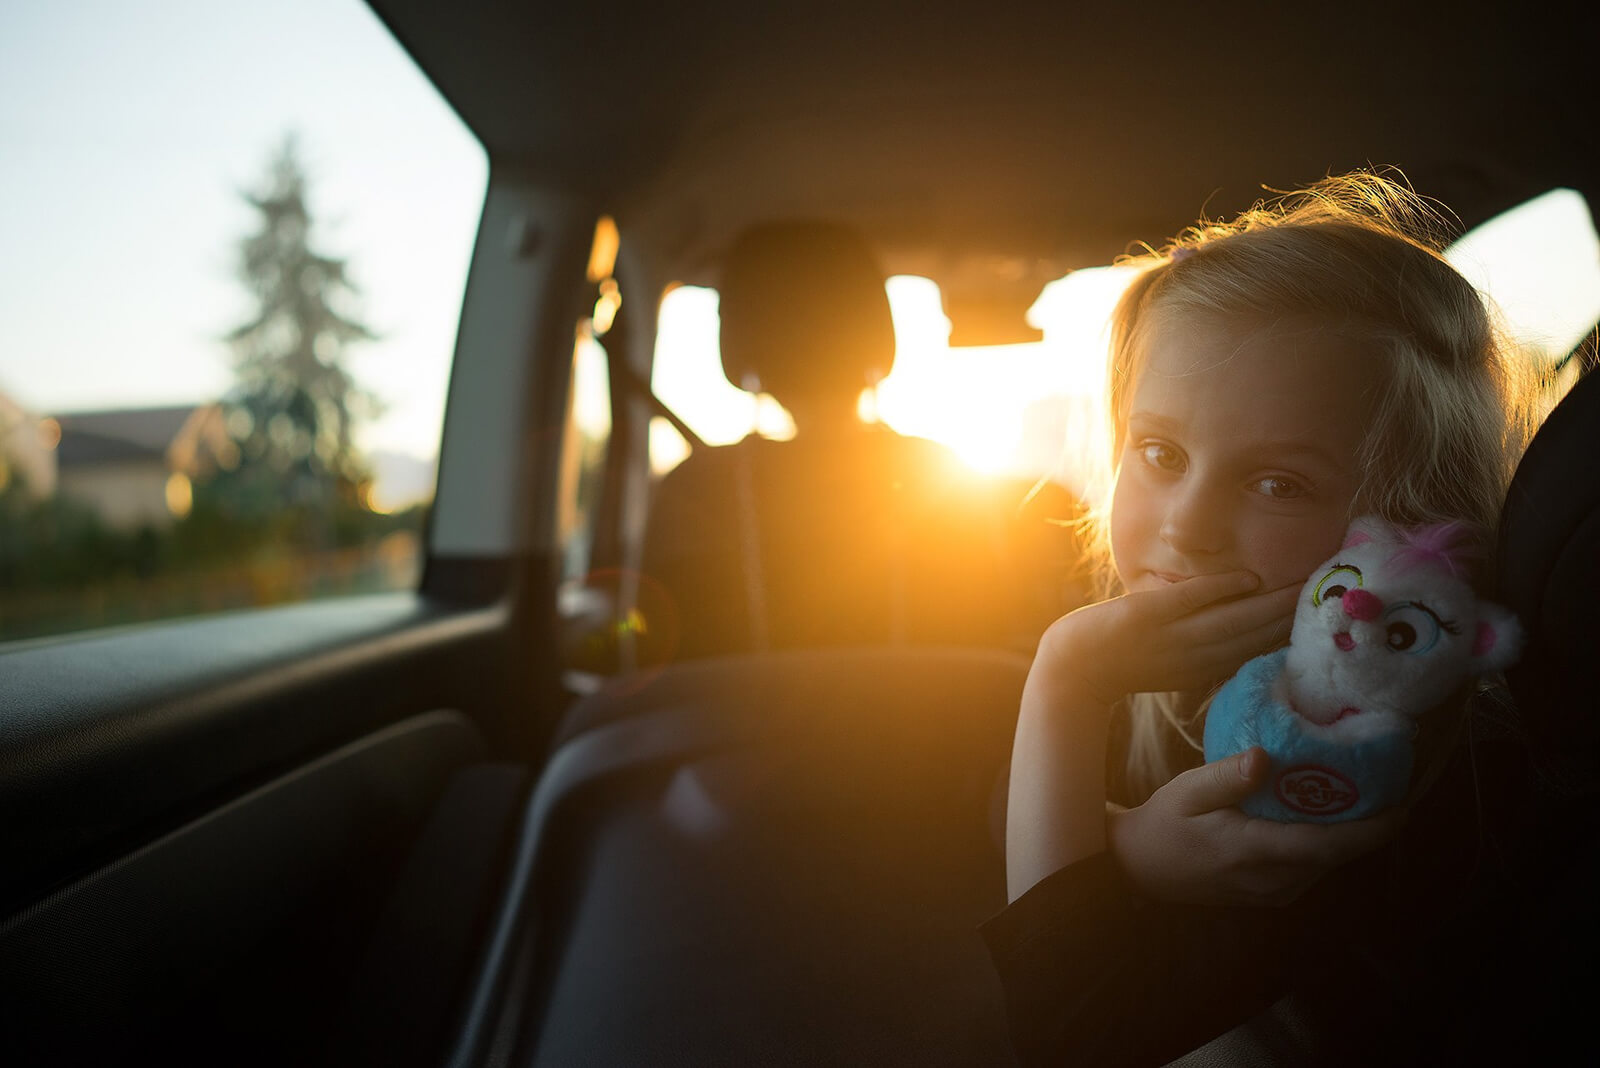 ffe child in car sunset